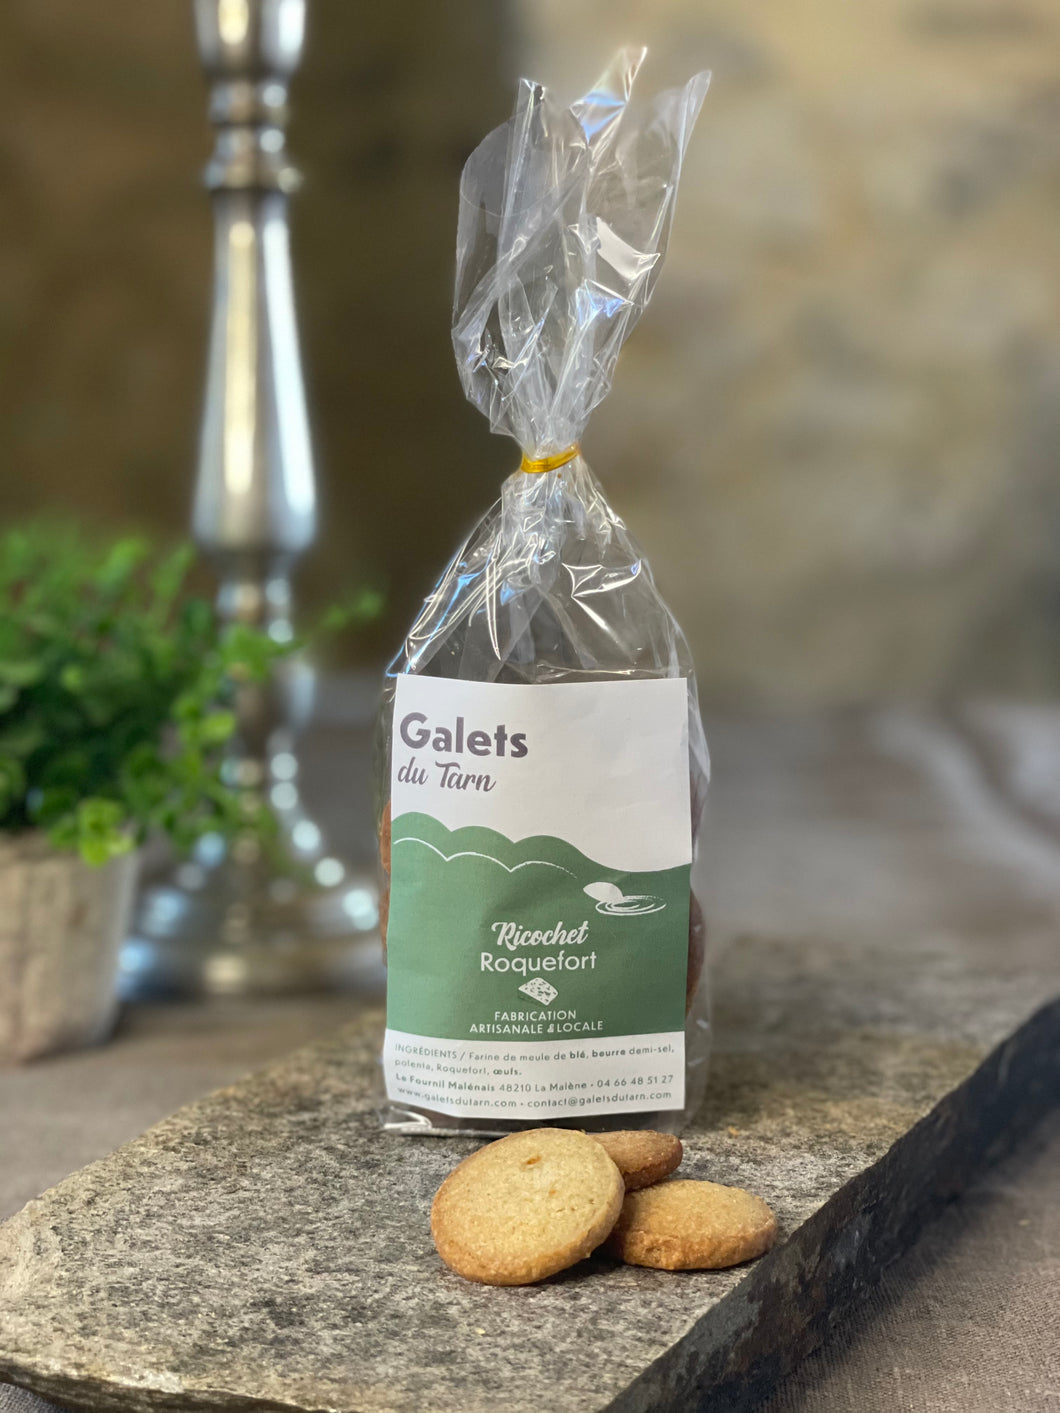 Galet du tarn salted biscuit with Roquefort cheese - 100g